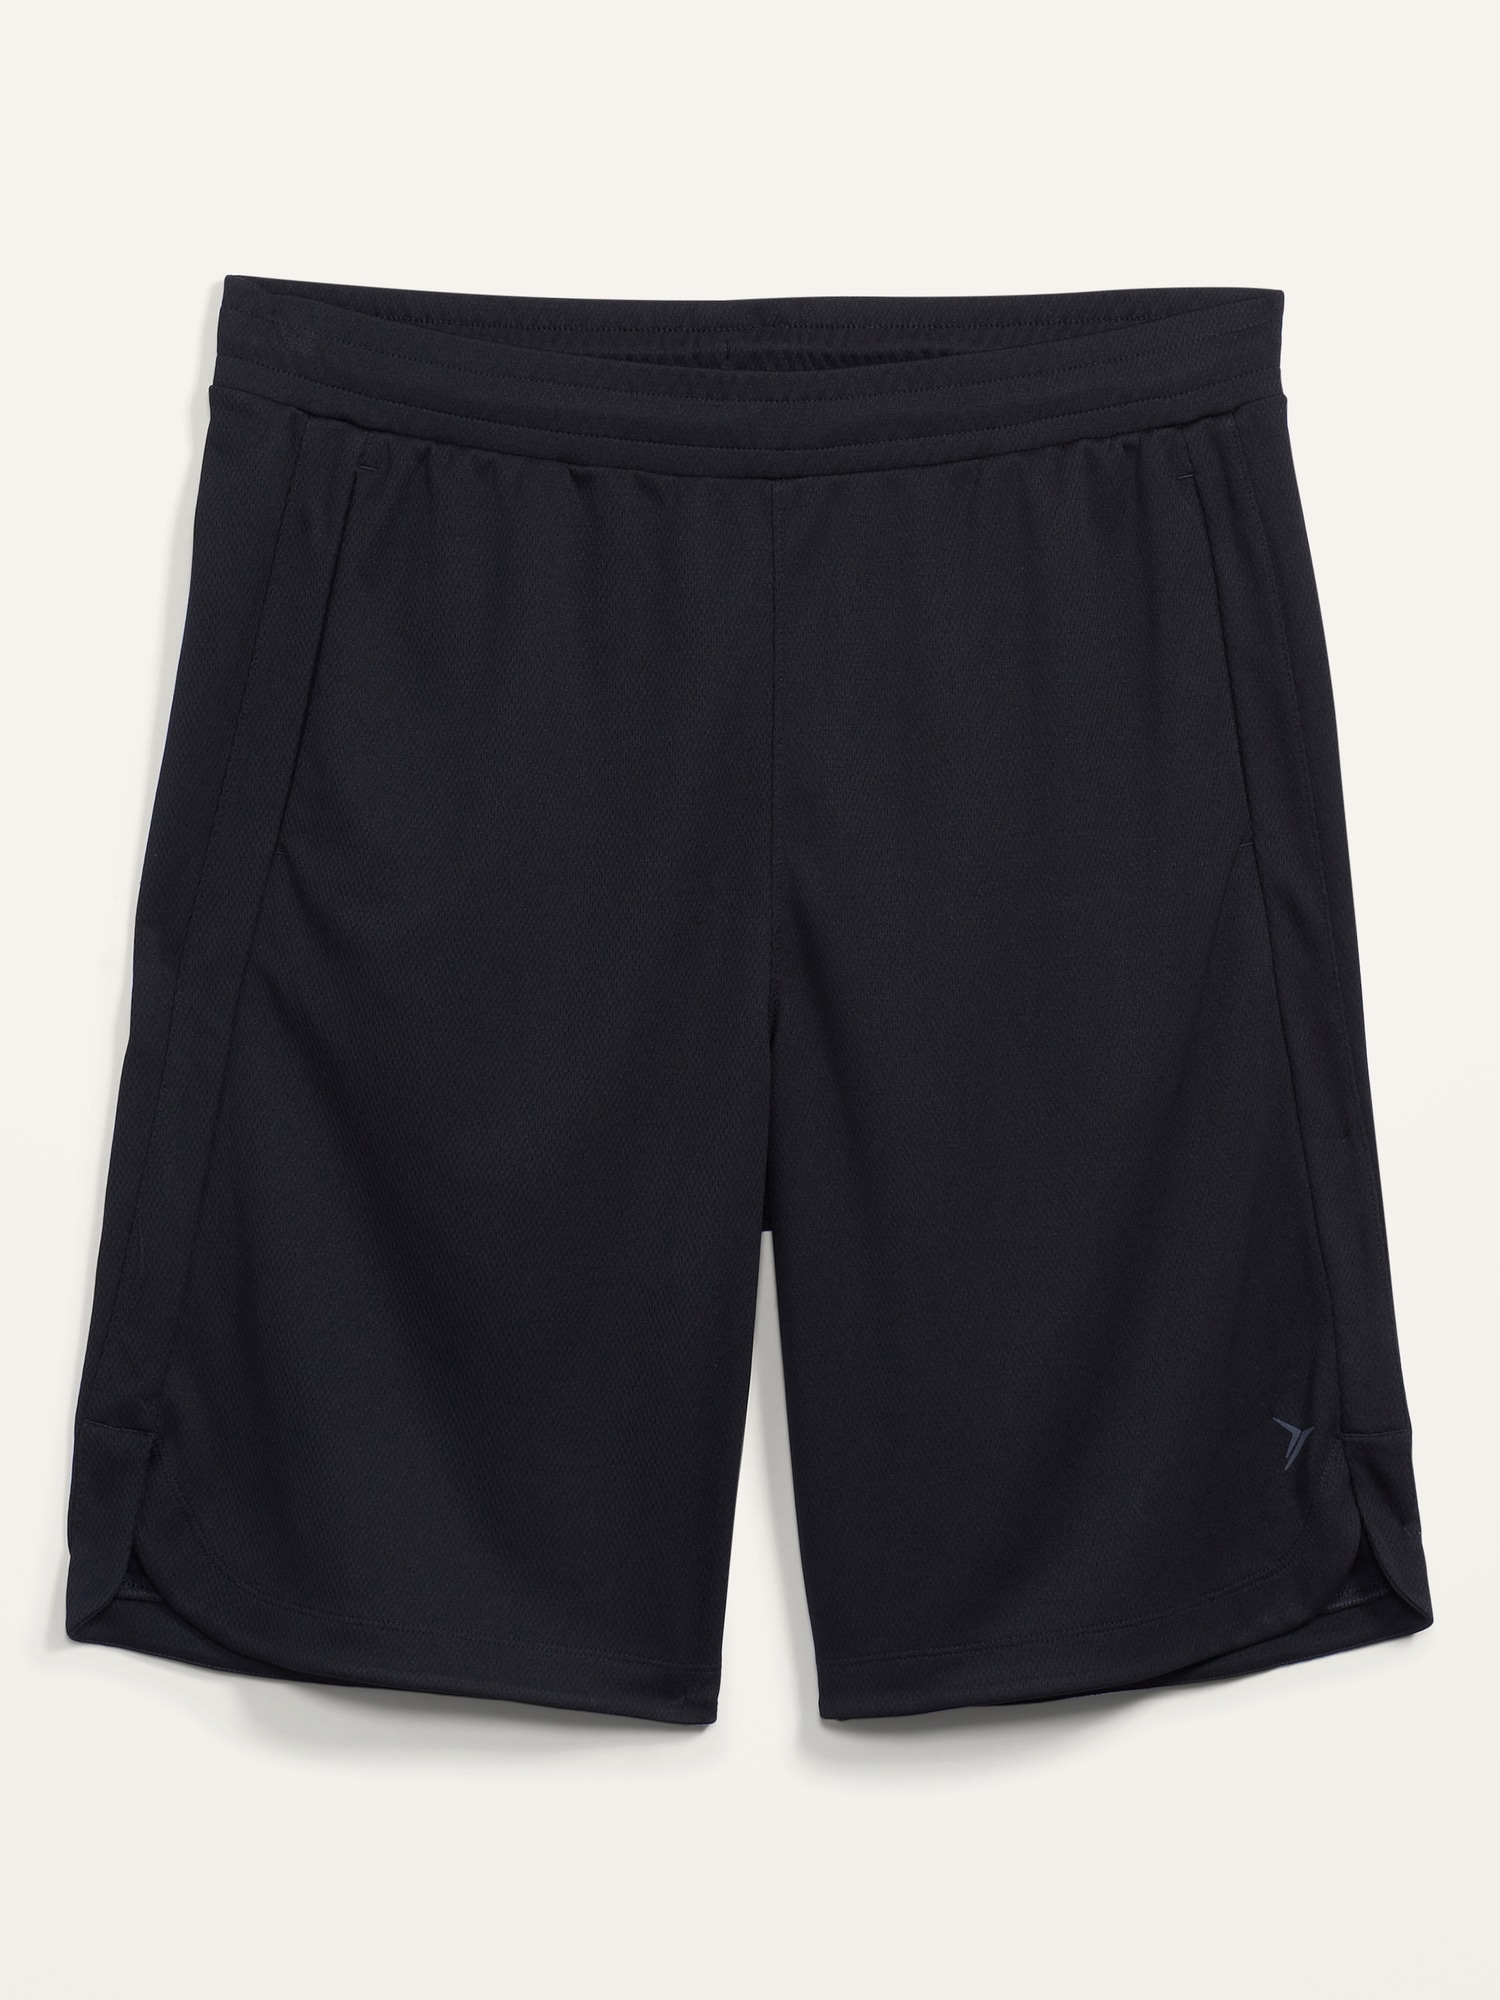 Go-Dry Mesh Basketball Shorts for Men -- 10-inch inseam | Old Navy